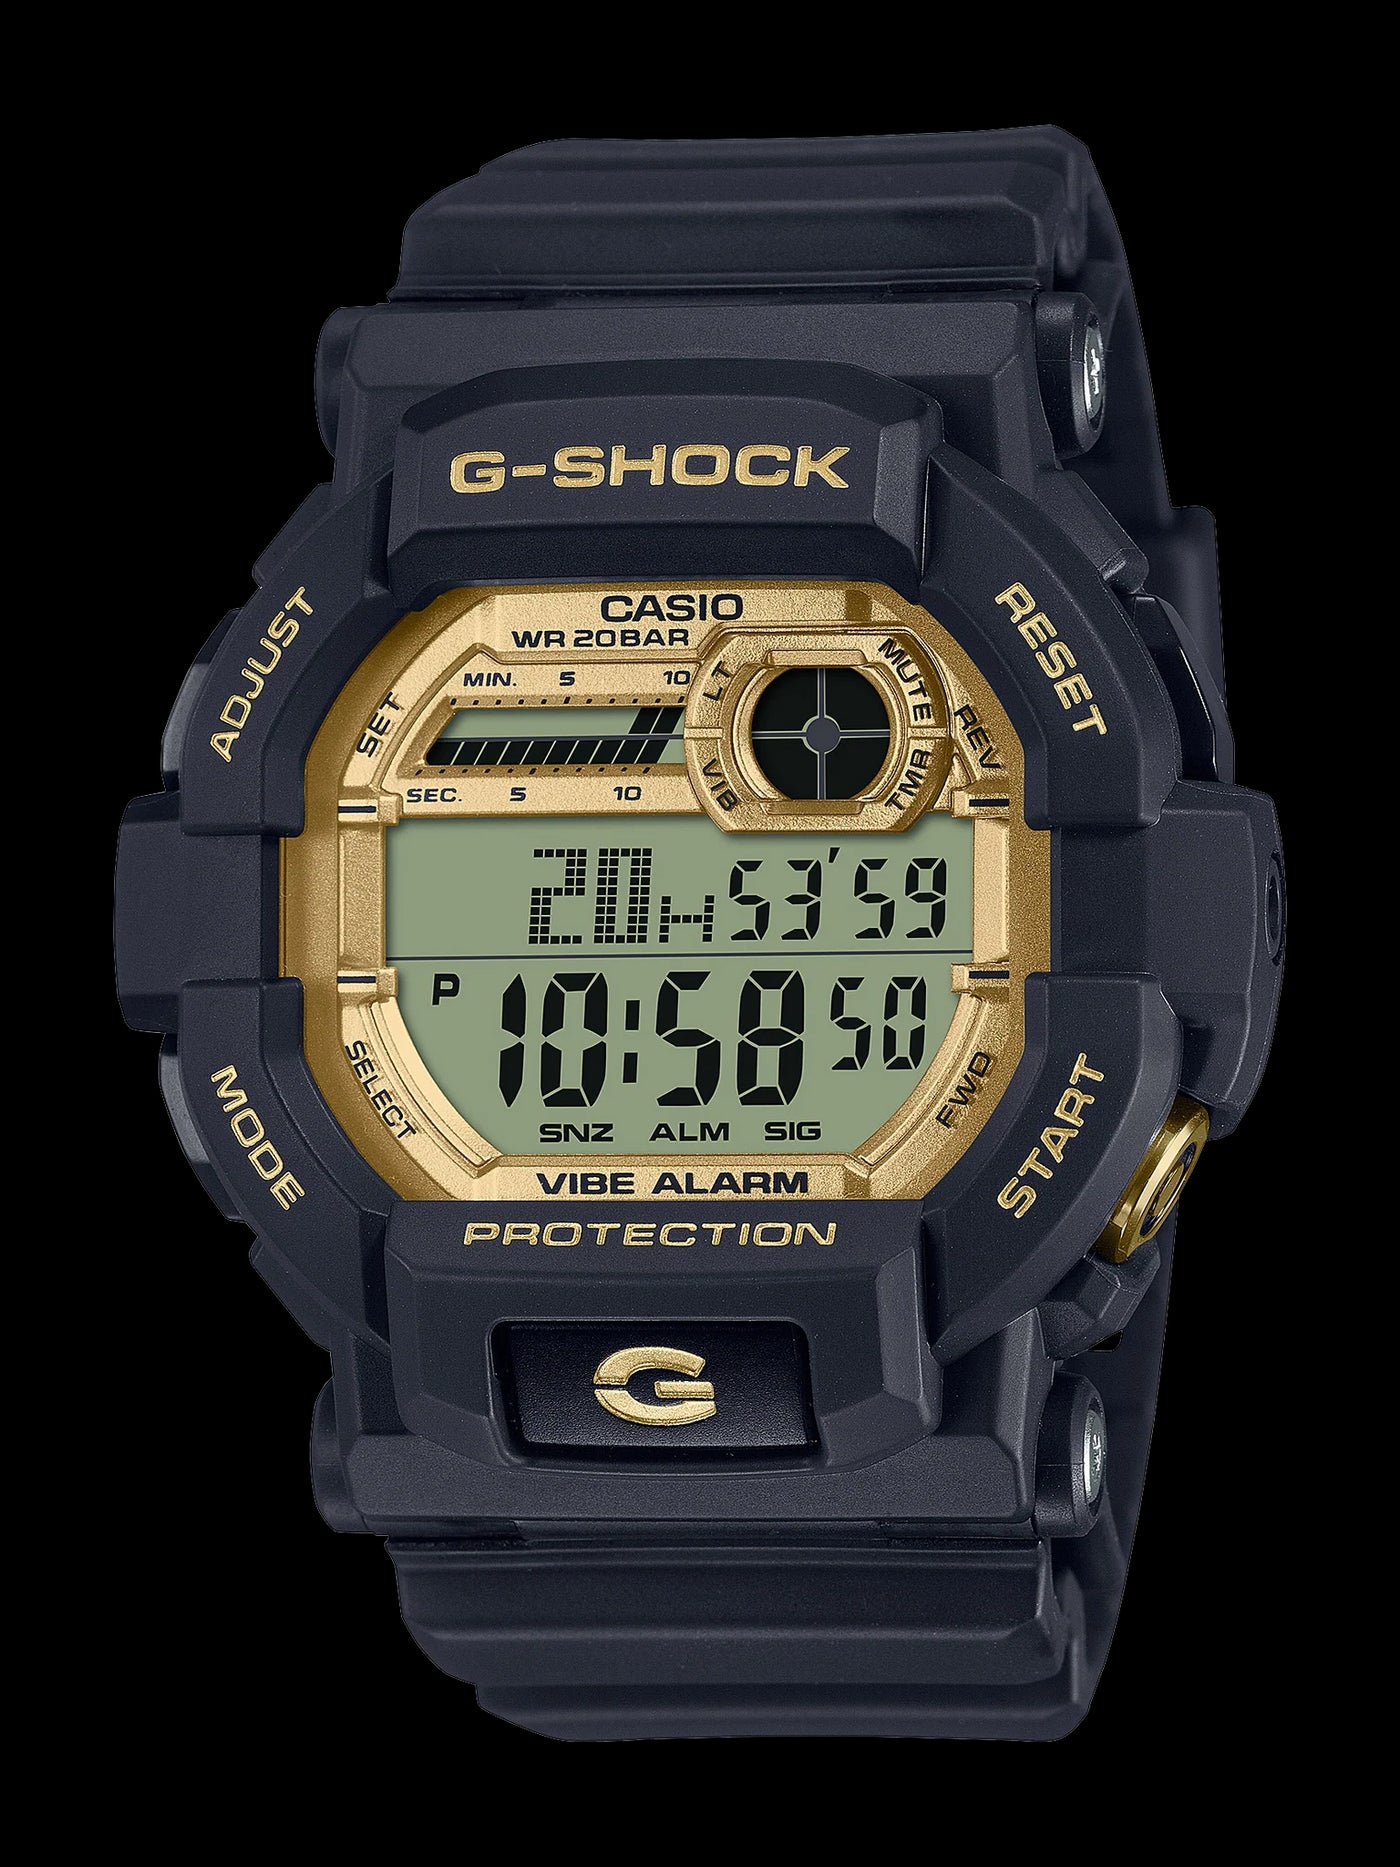 Black & gold G-Shock Digital Watch